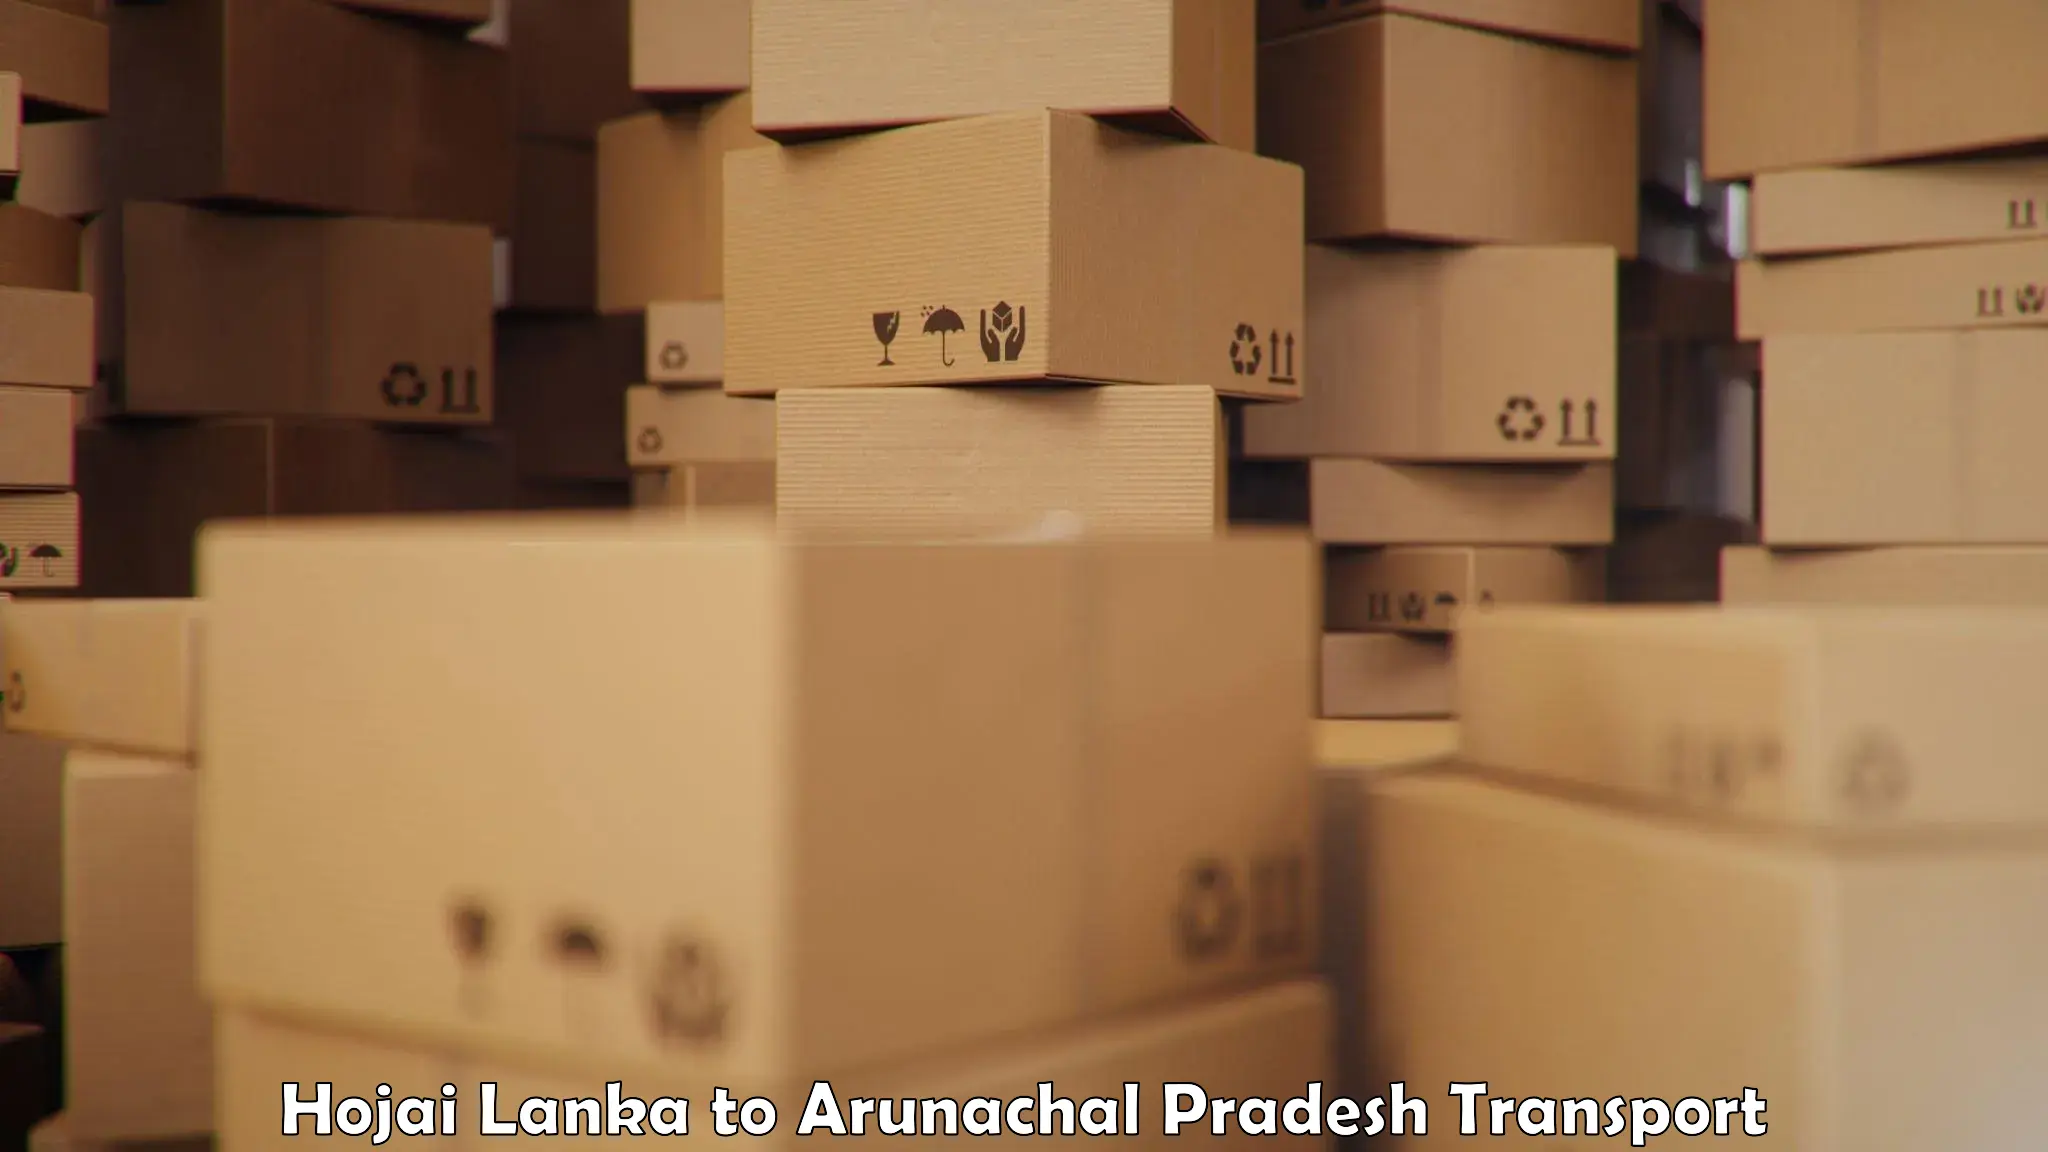 Transportation services Hojai Lanka to Namsai